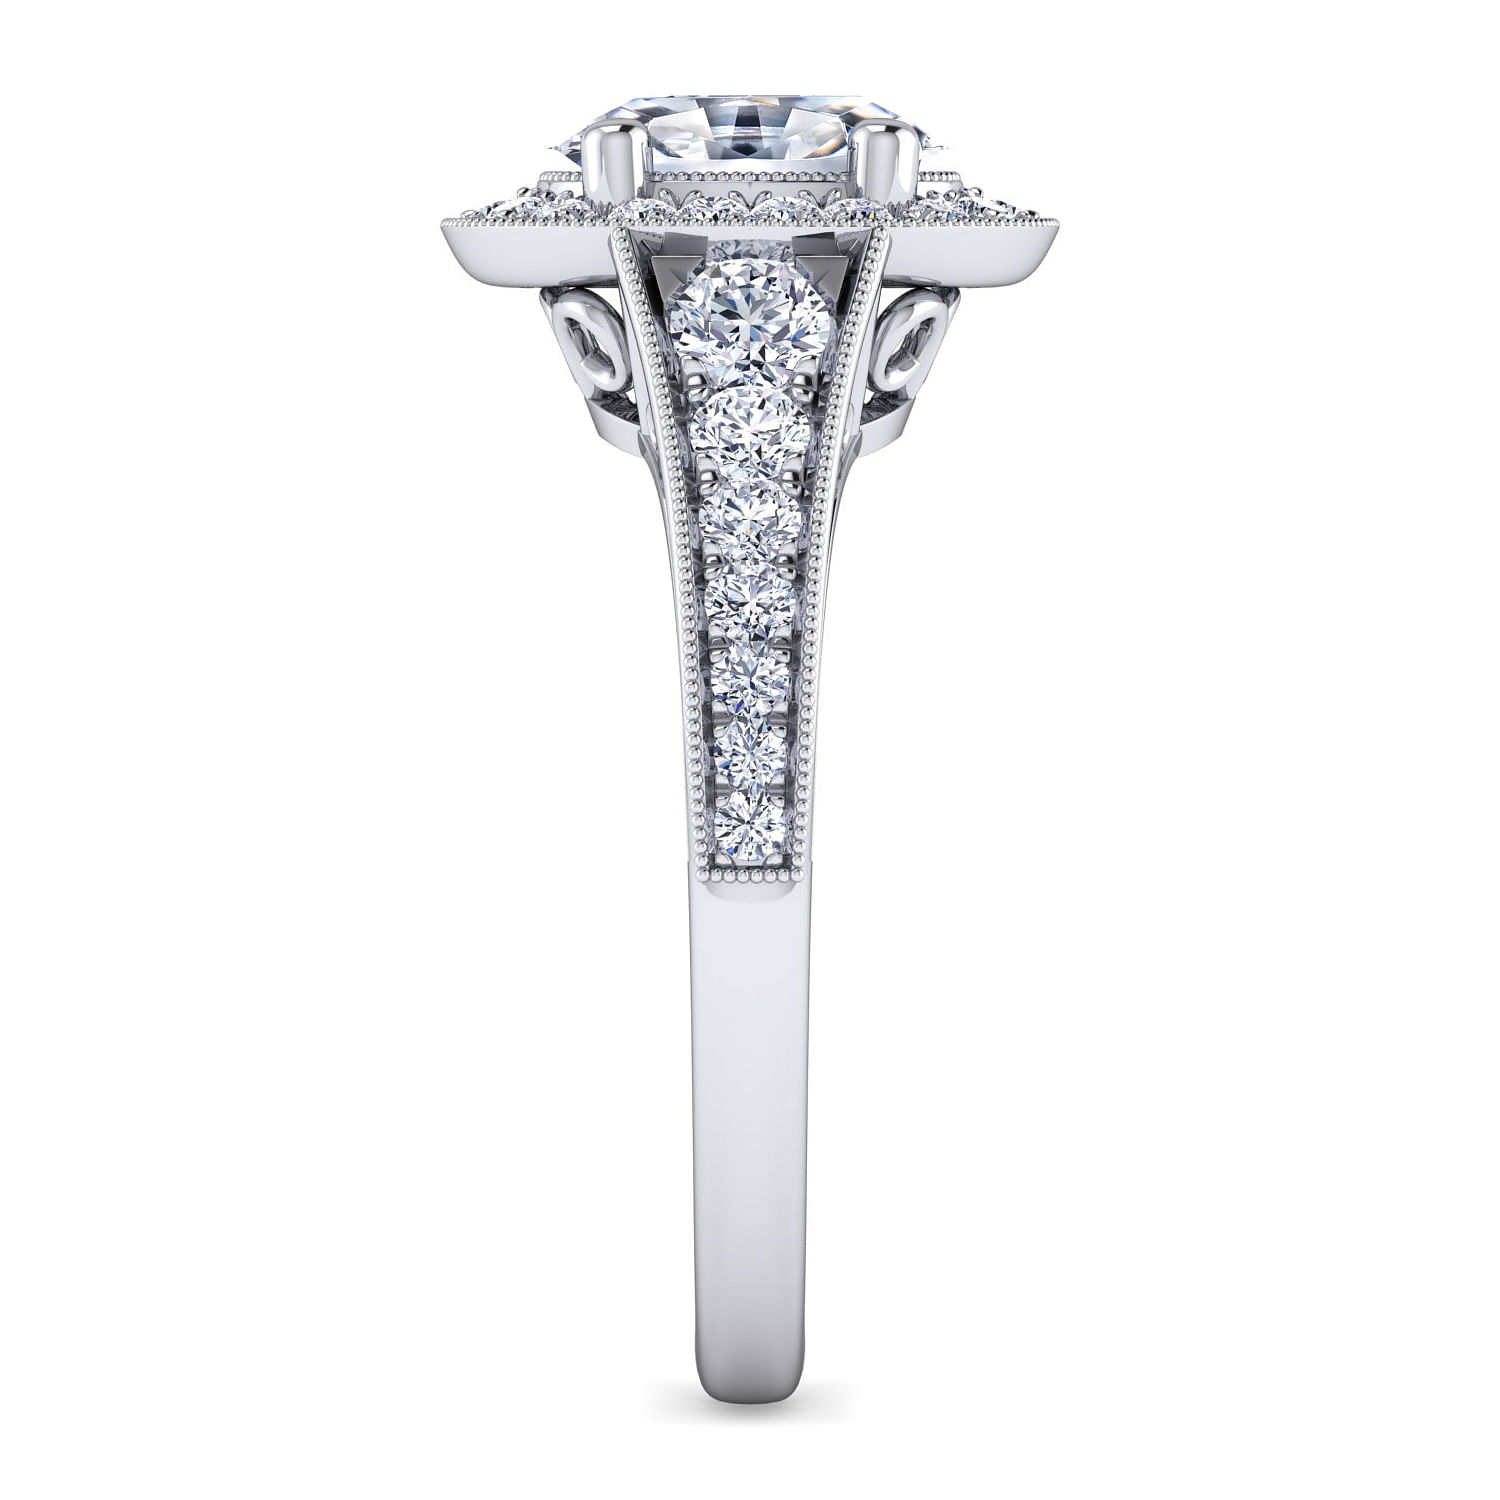 Vintage Inspired 14K White Gold Oval Halo Diamond Engagement Ring